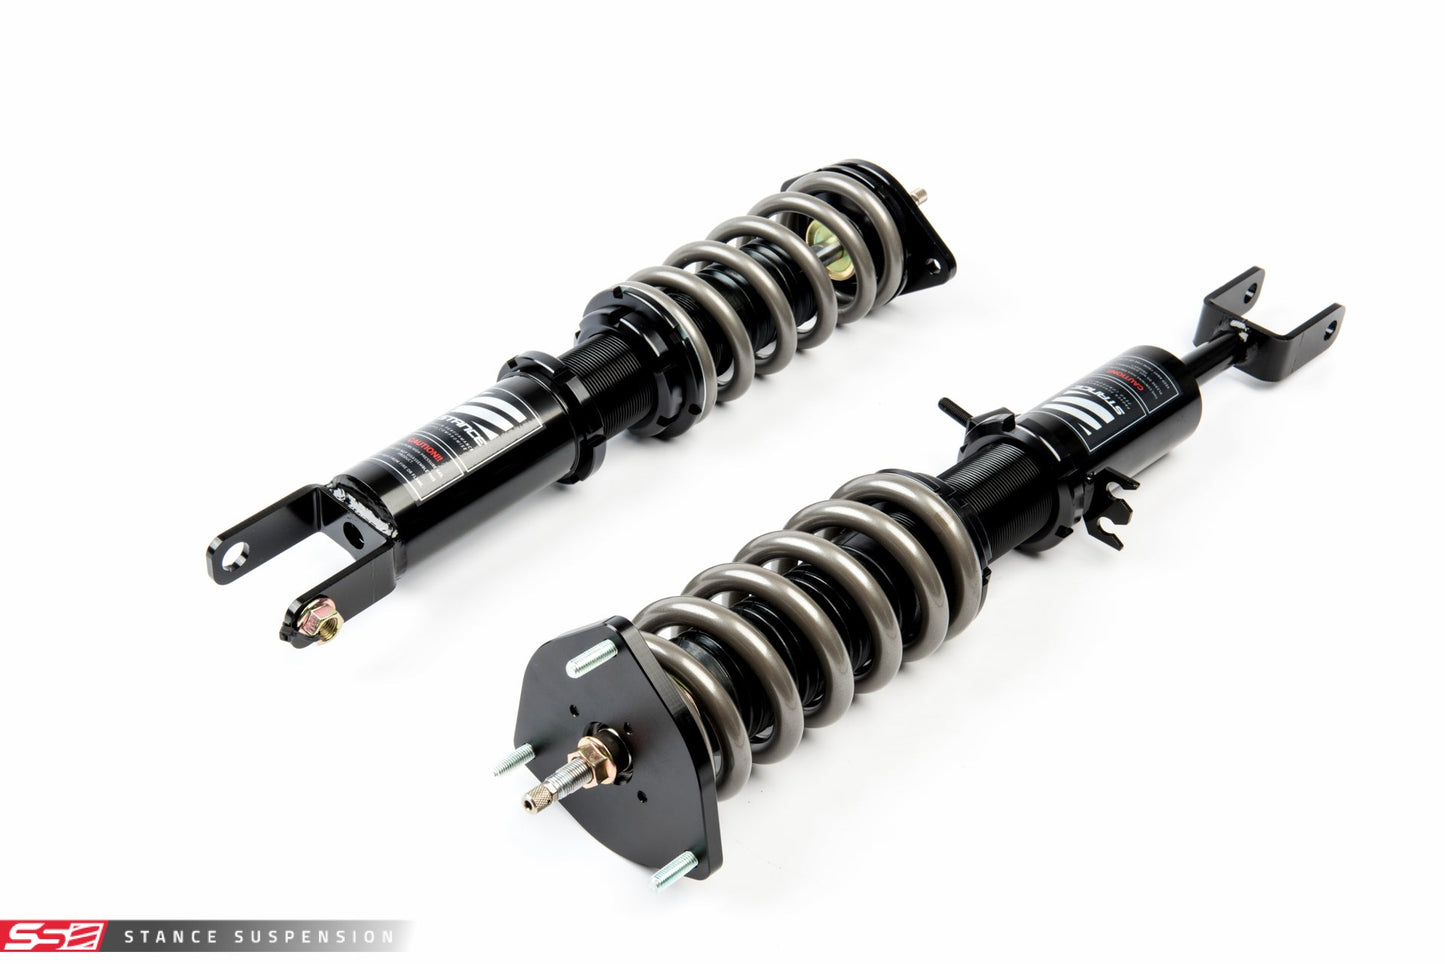 Stance Suspension - XR1 Coilovers for 03-08 Nissan 350Z Z33 & Infiniti G35 V35 RWD (ST-Z33-XR1)